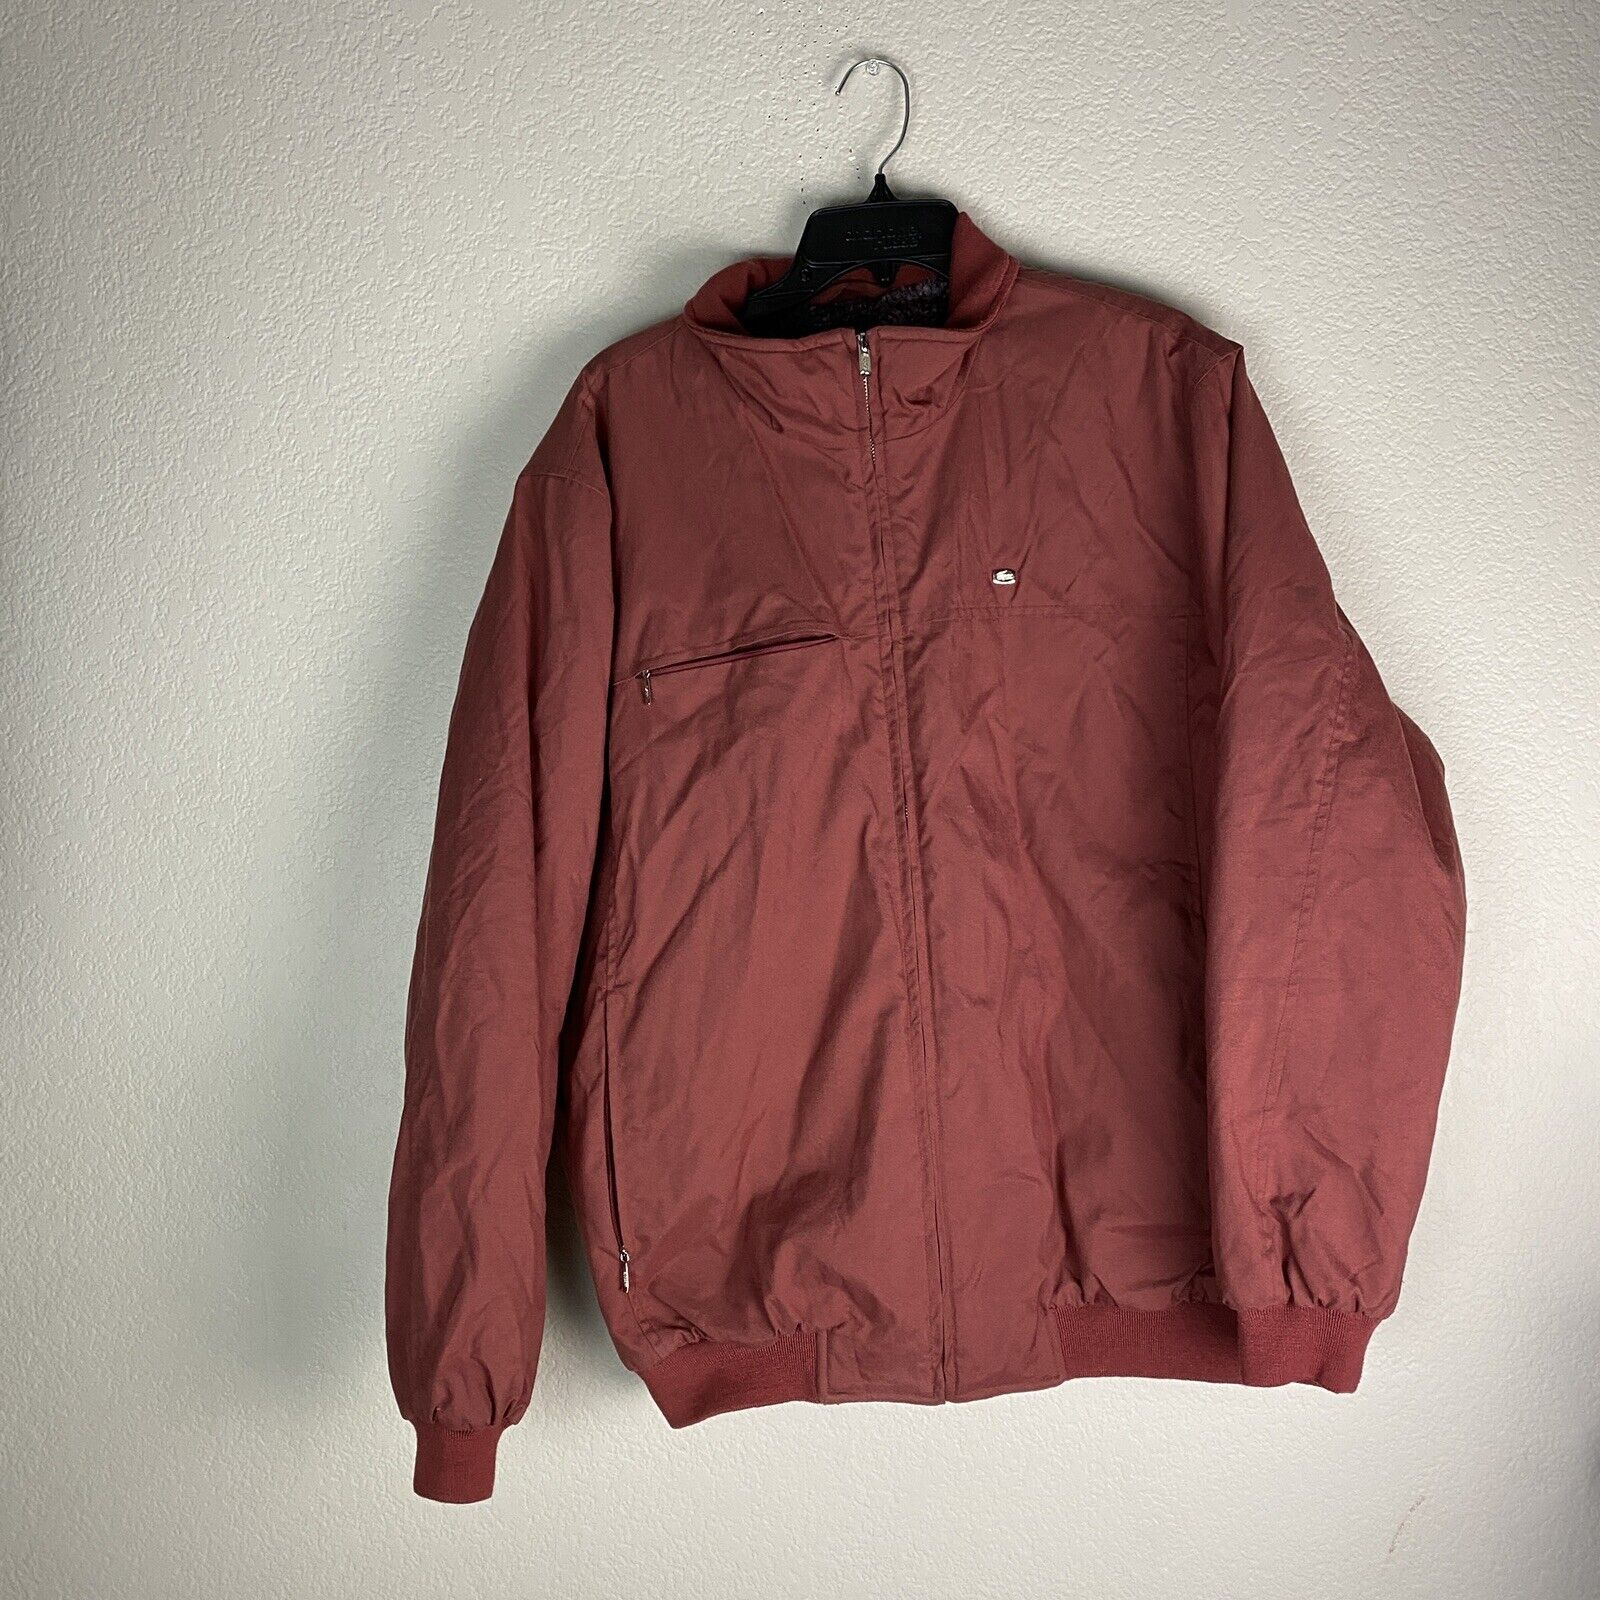 Lacoste Devanlay Jacket Vintage Size 54/5 